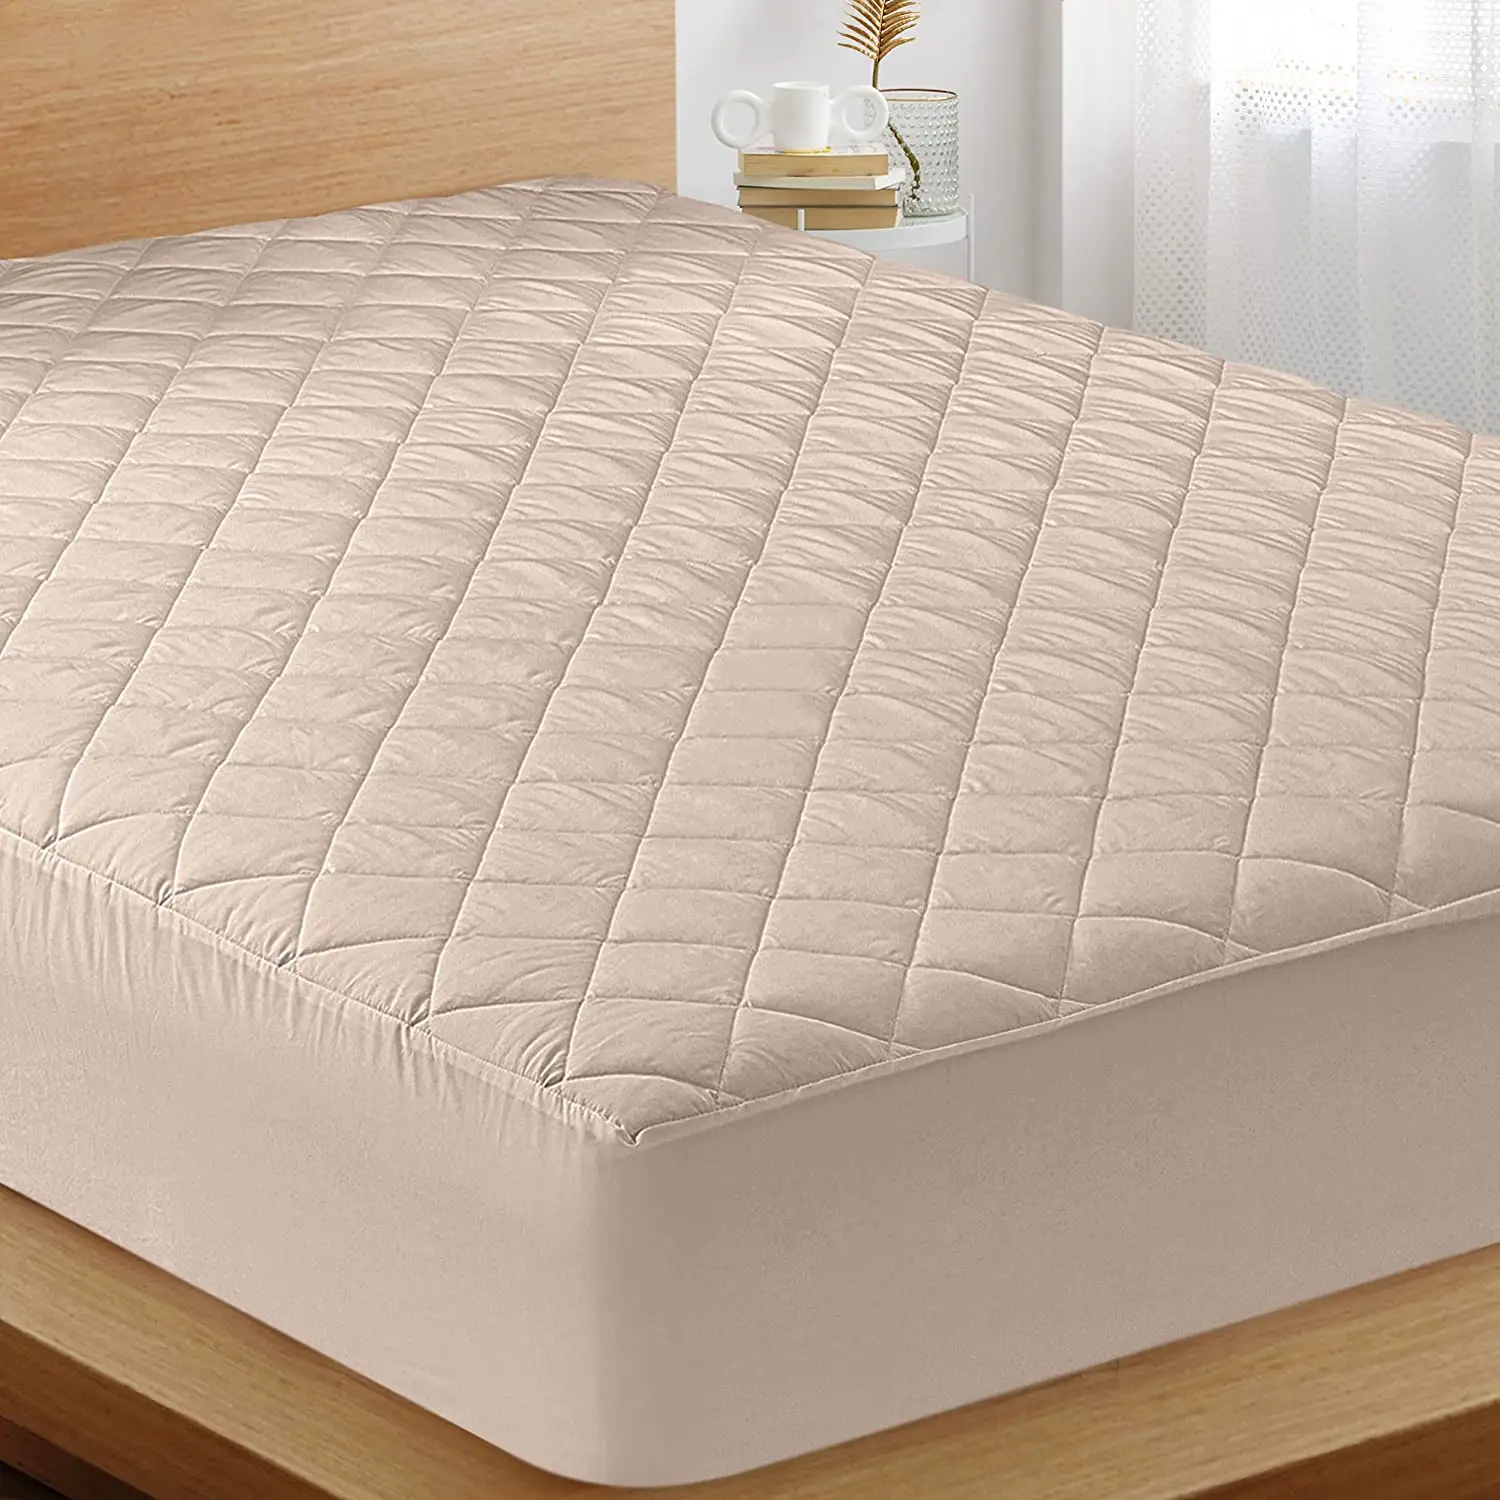 Quilted Mattress cover polyester mattress protector quilted water proof mattress cover